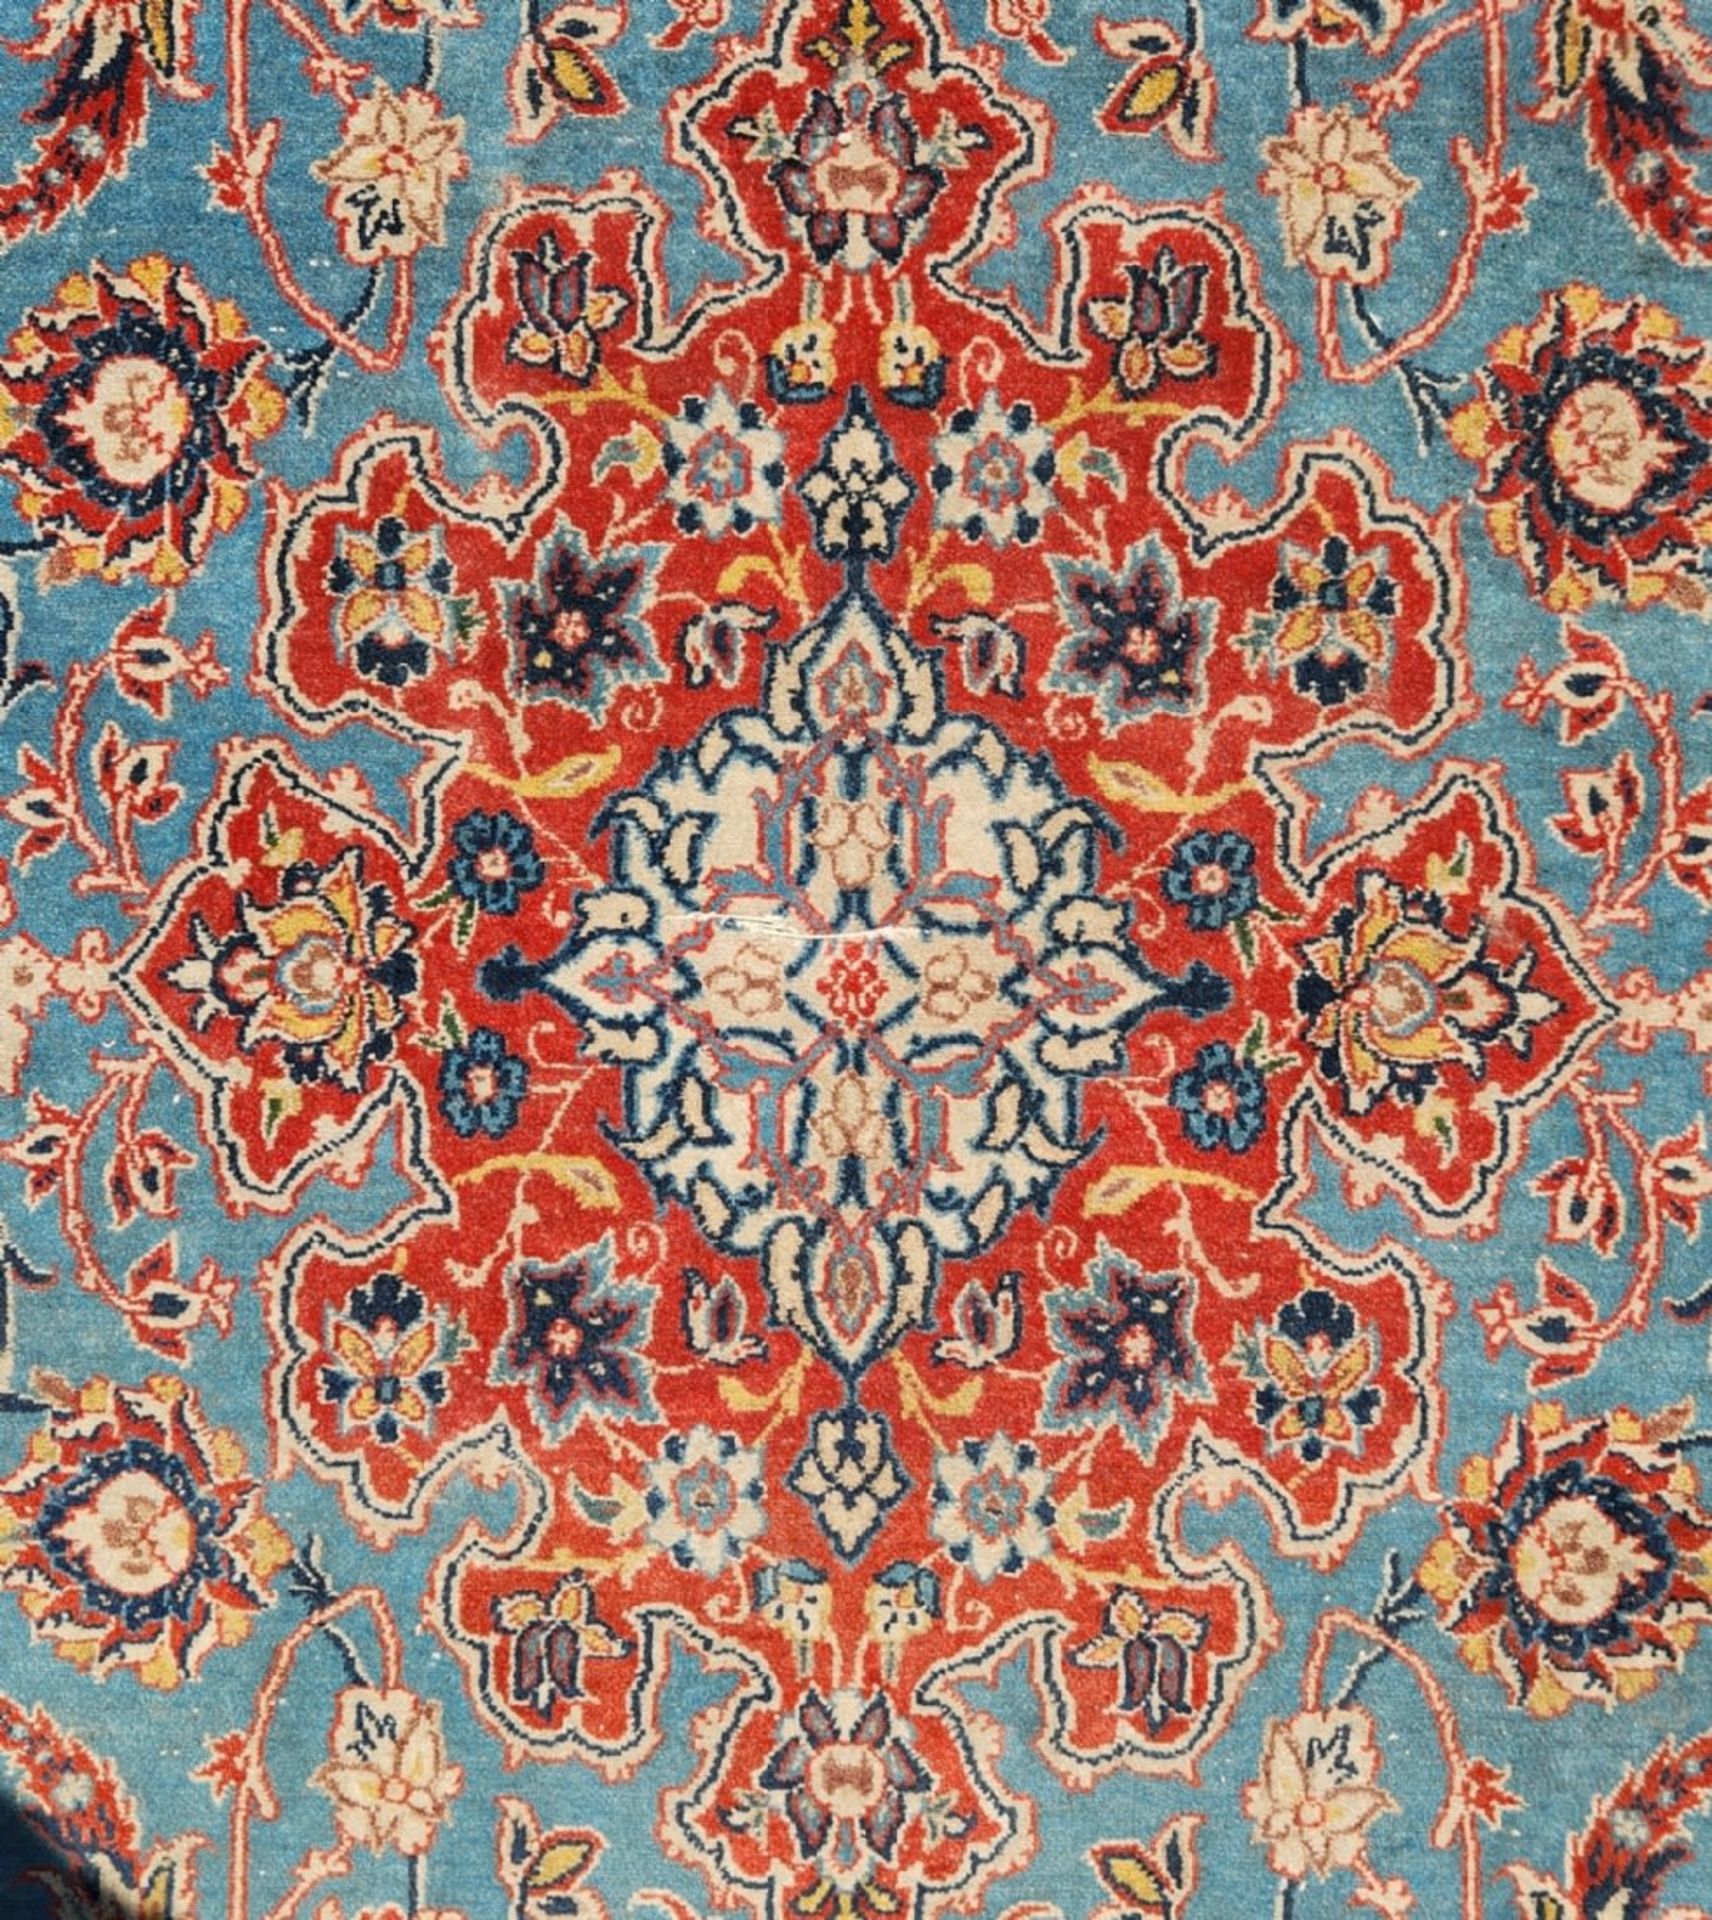 Handmade woven Persian rug, carpet size: 245X150 cm. - Image 2 of 3